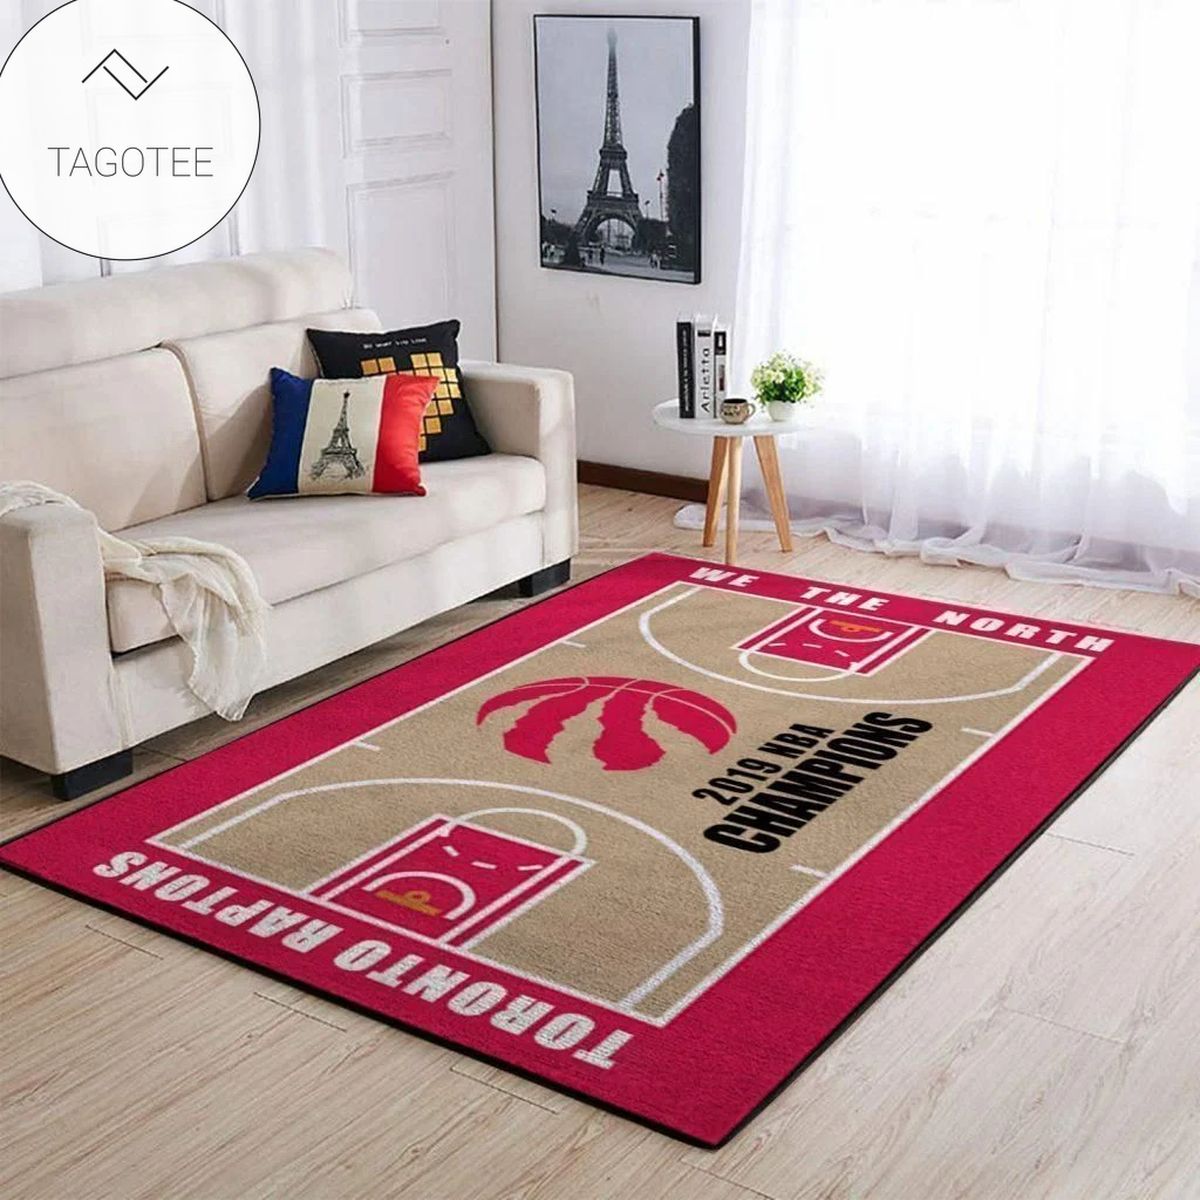 Toronto Raptors Area Rug NBA Basketball Team Logo Carpet Living Room Rugs Floor Decor 2003276